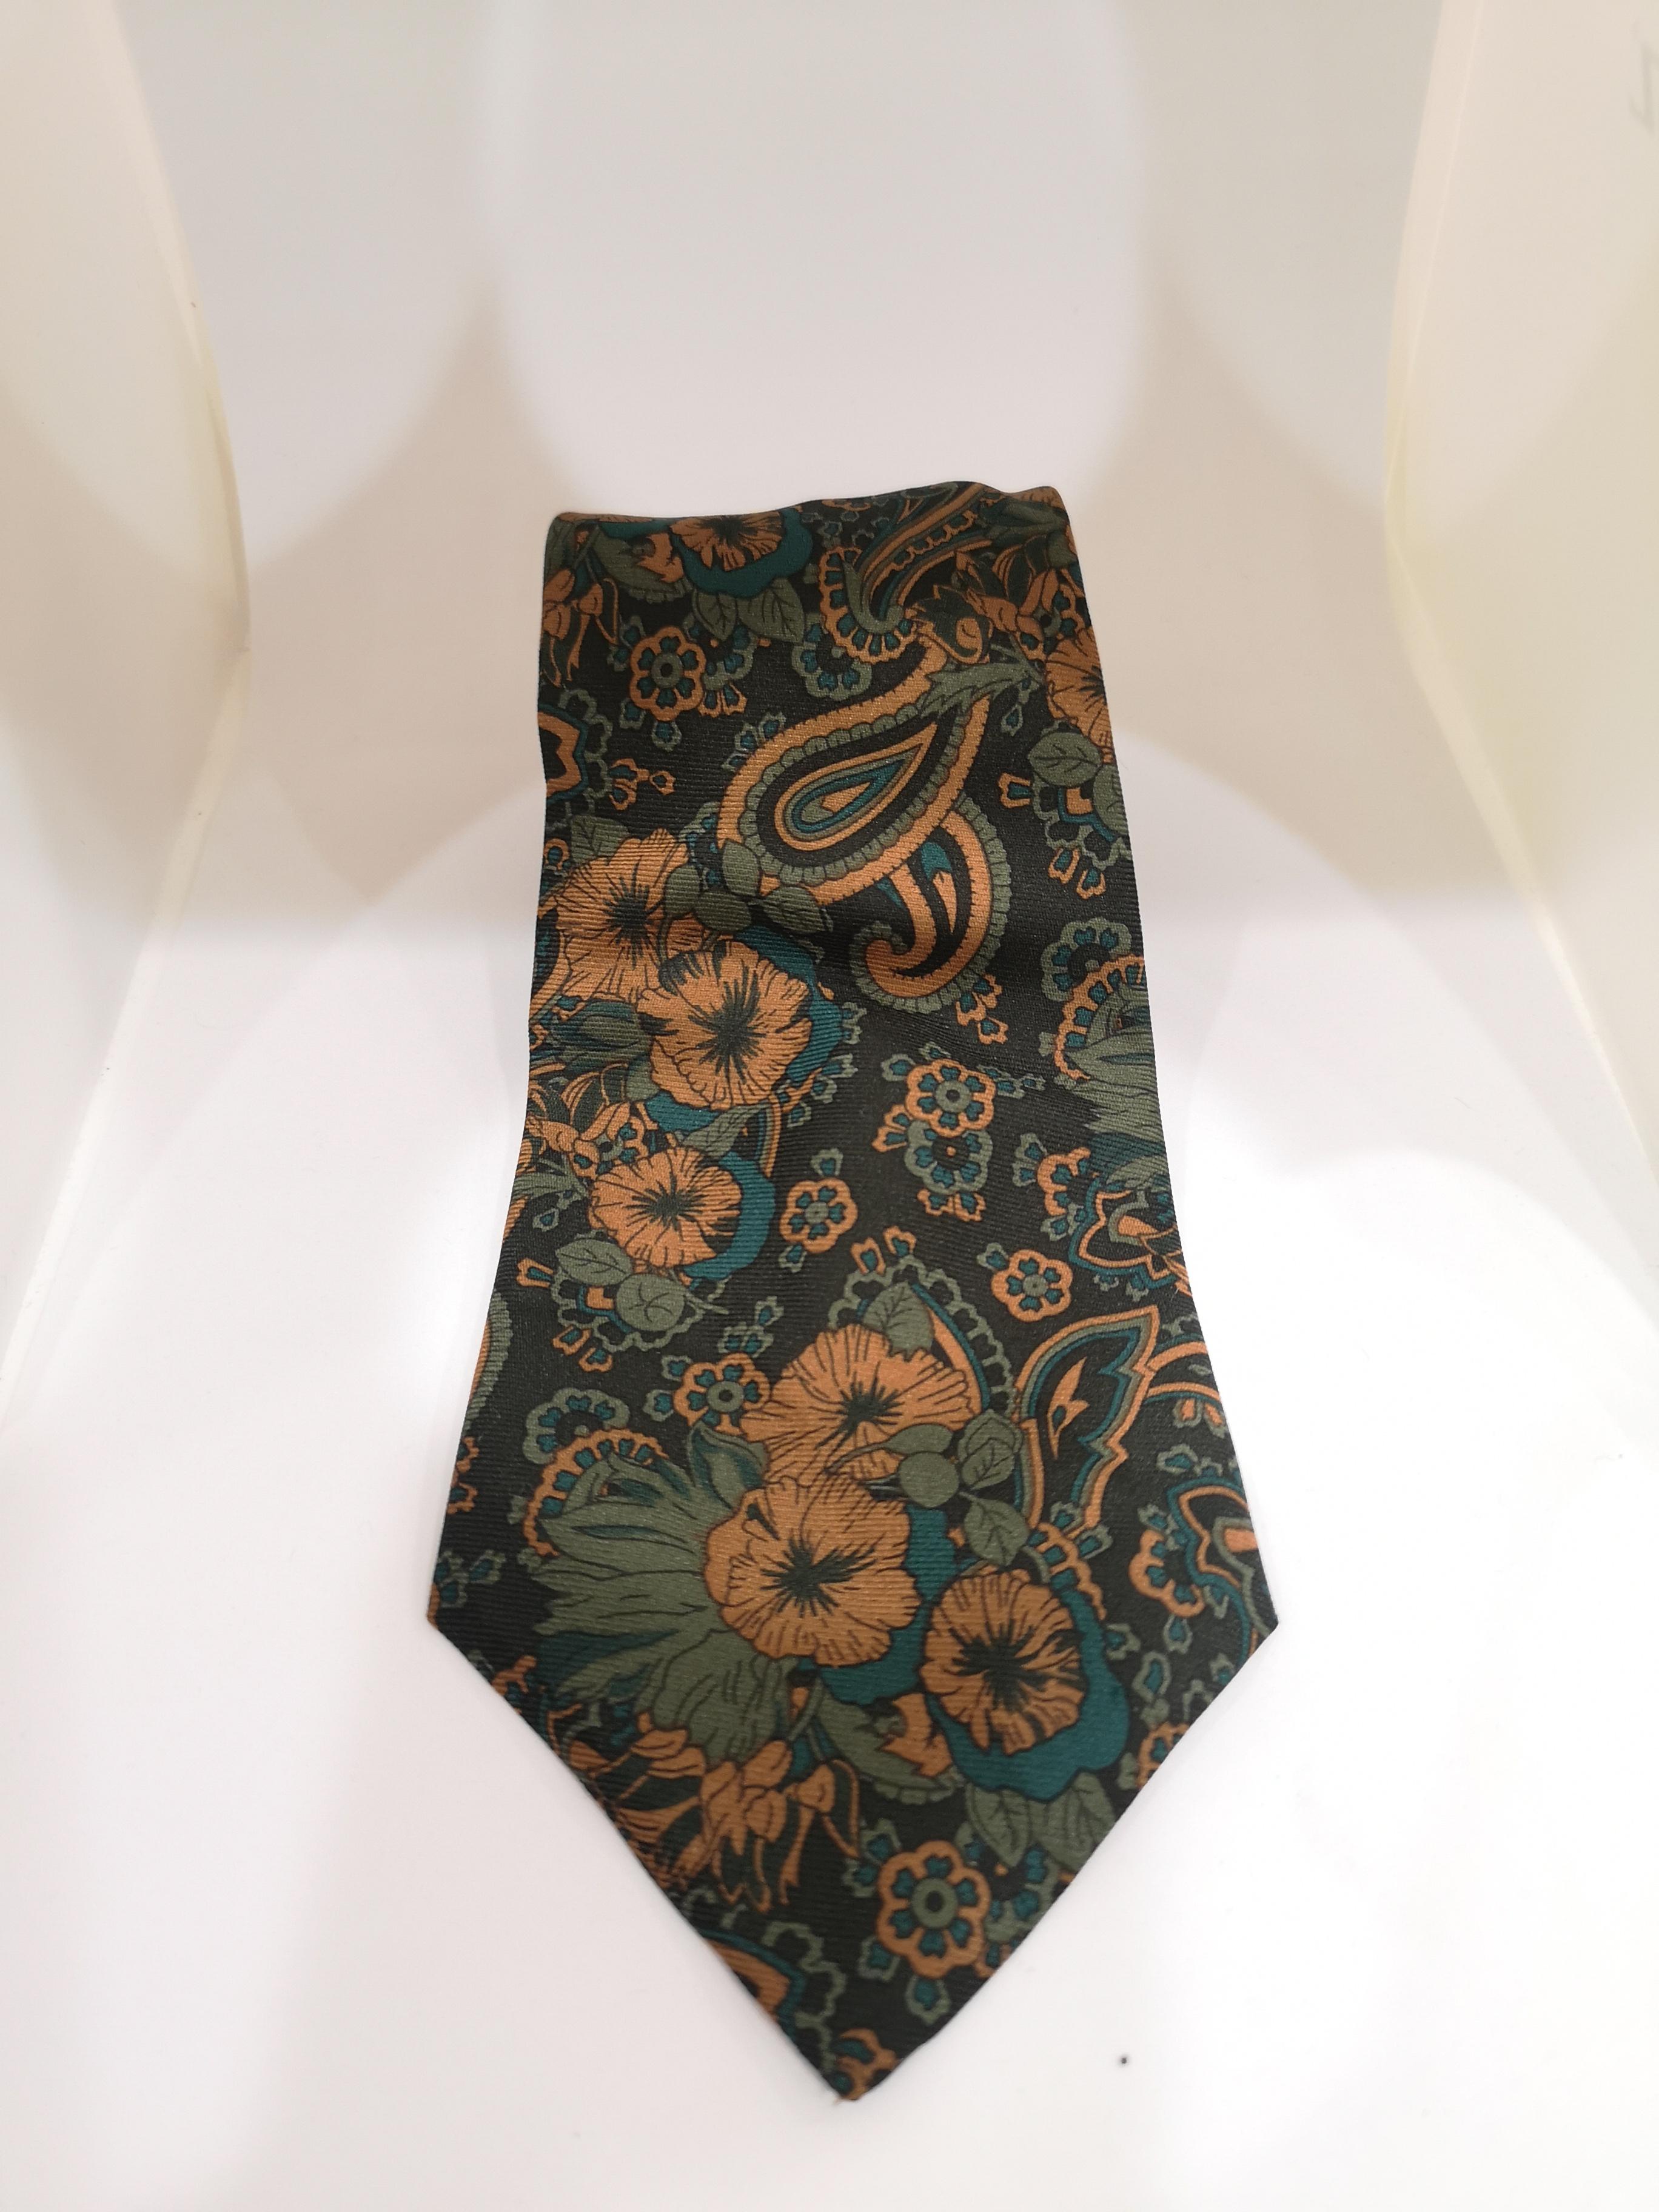 Nino Salzano multicoloured silk tie
totally made in italy